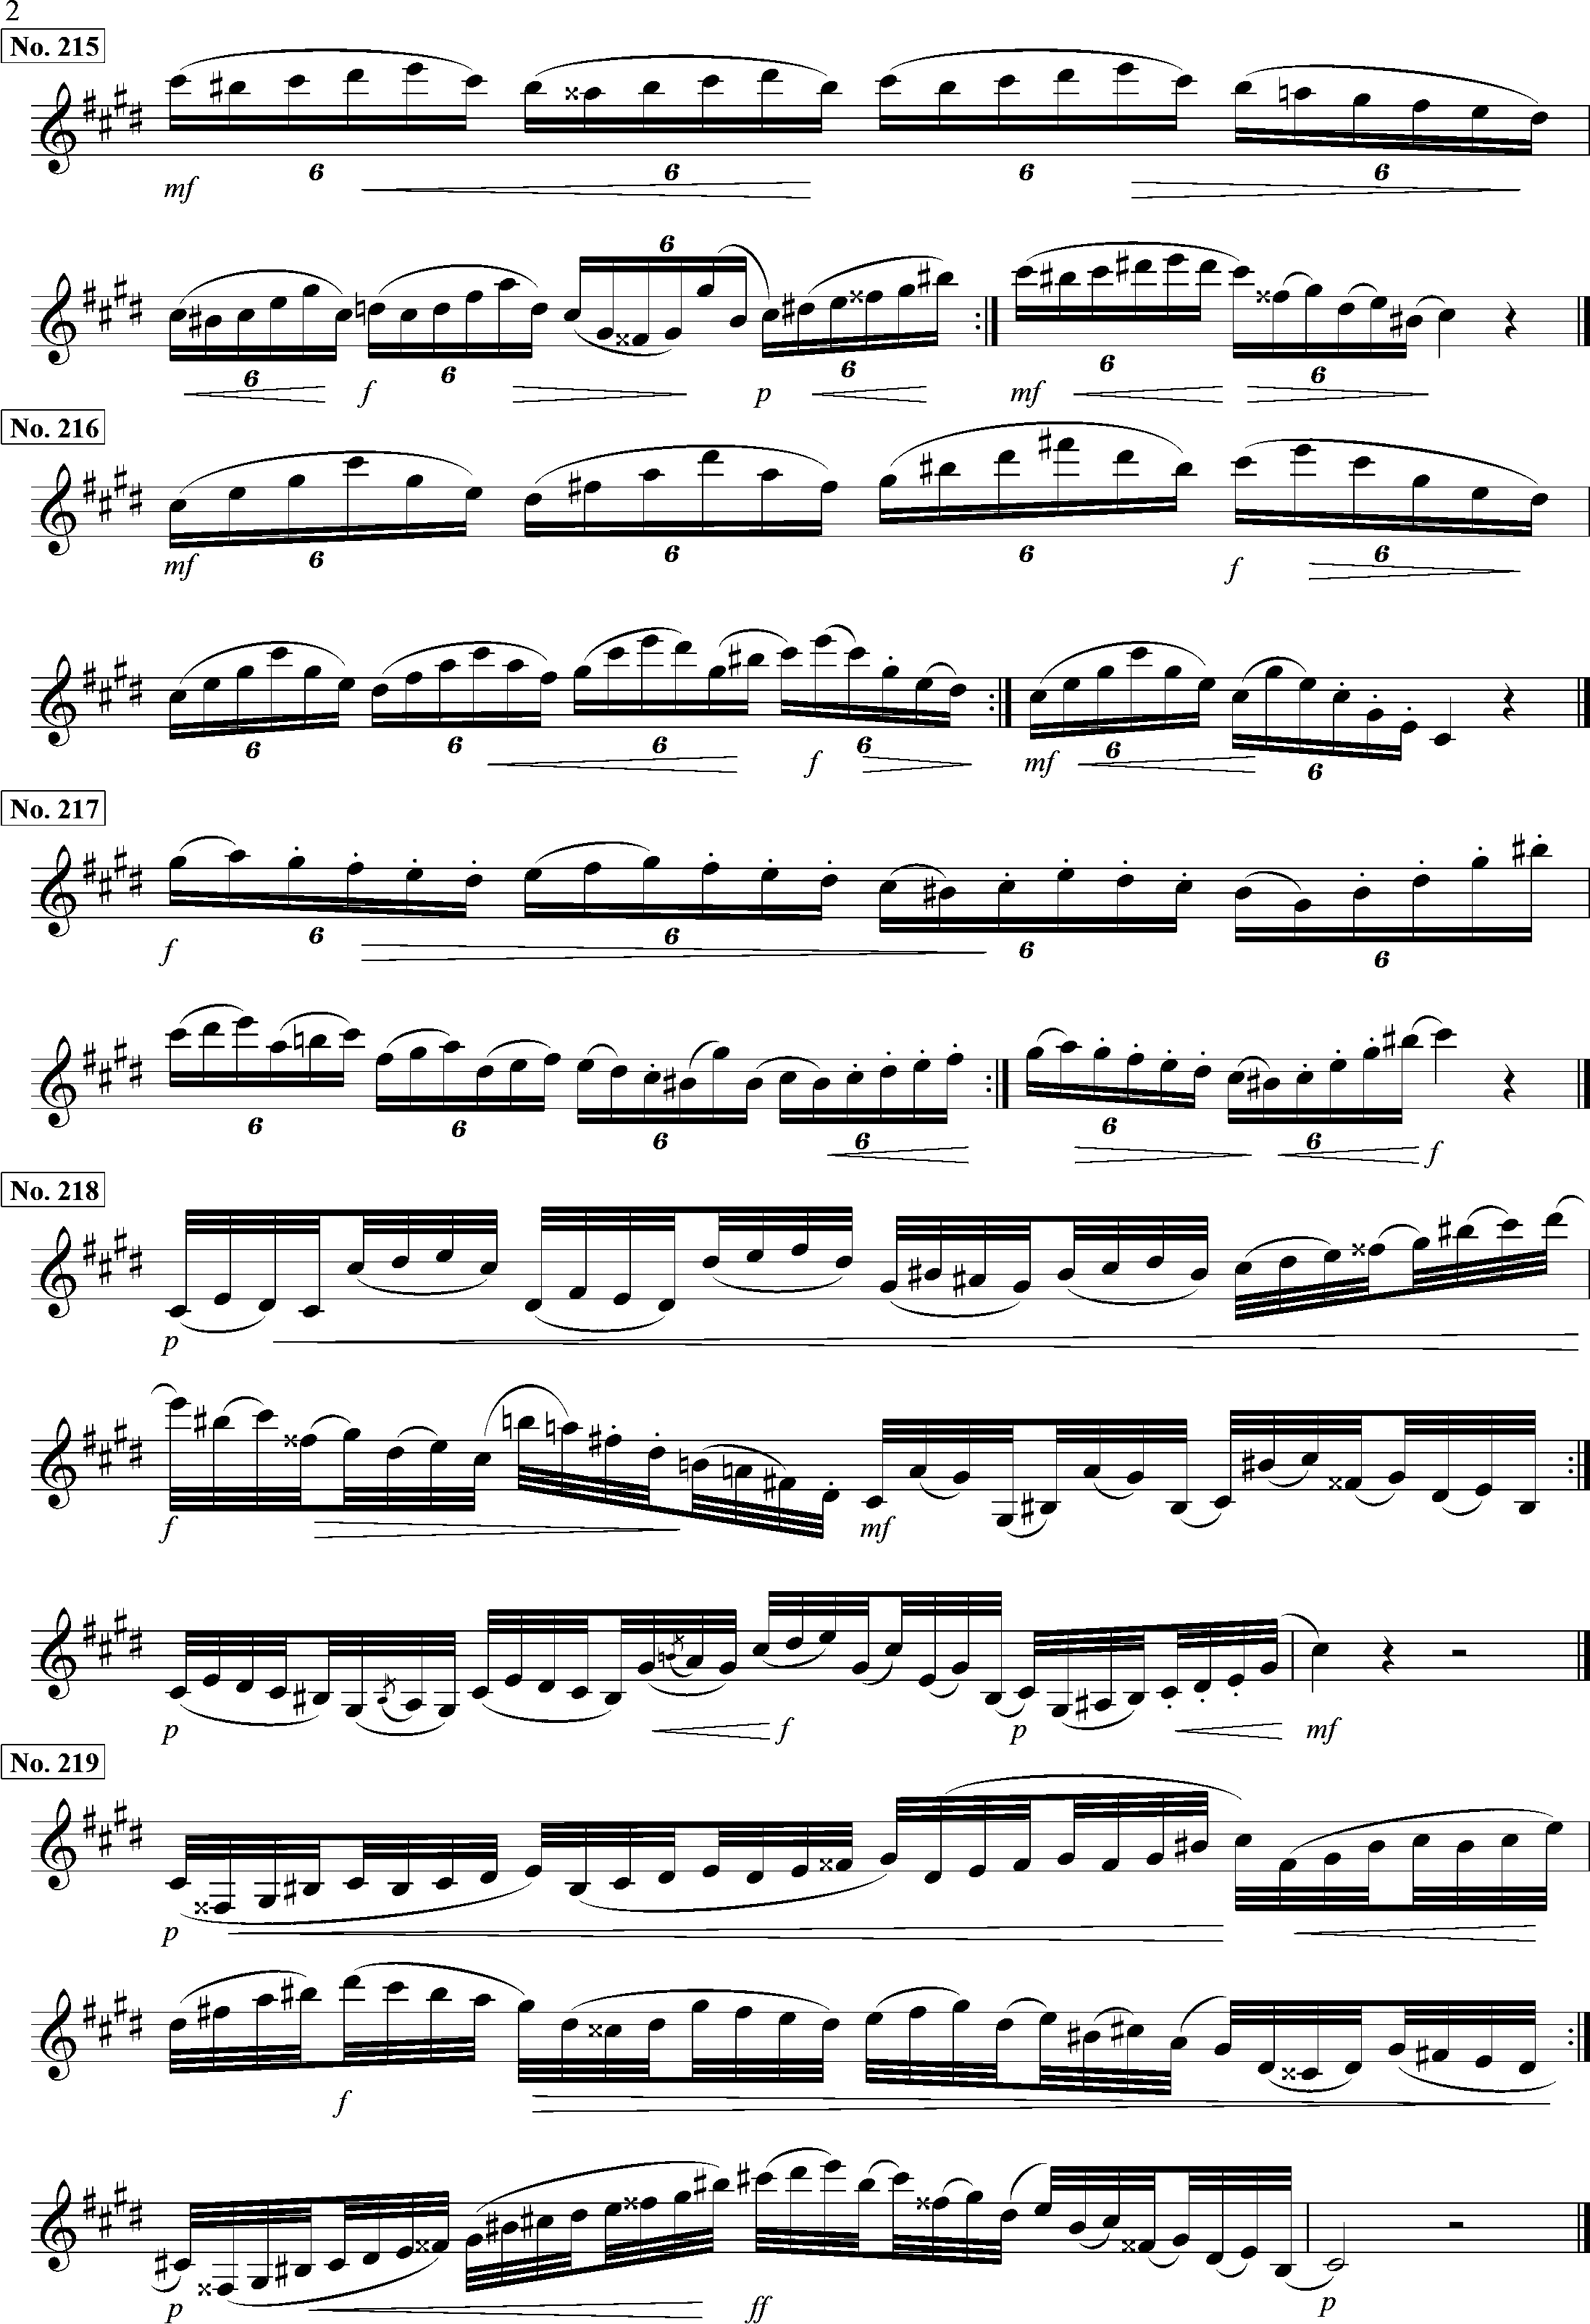 416-etüden-kröpsch, cis-minor, 002